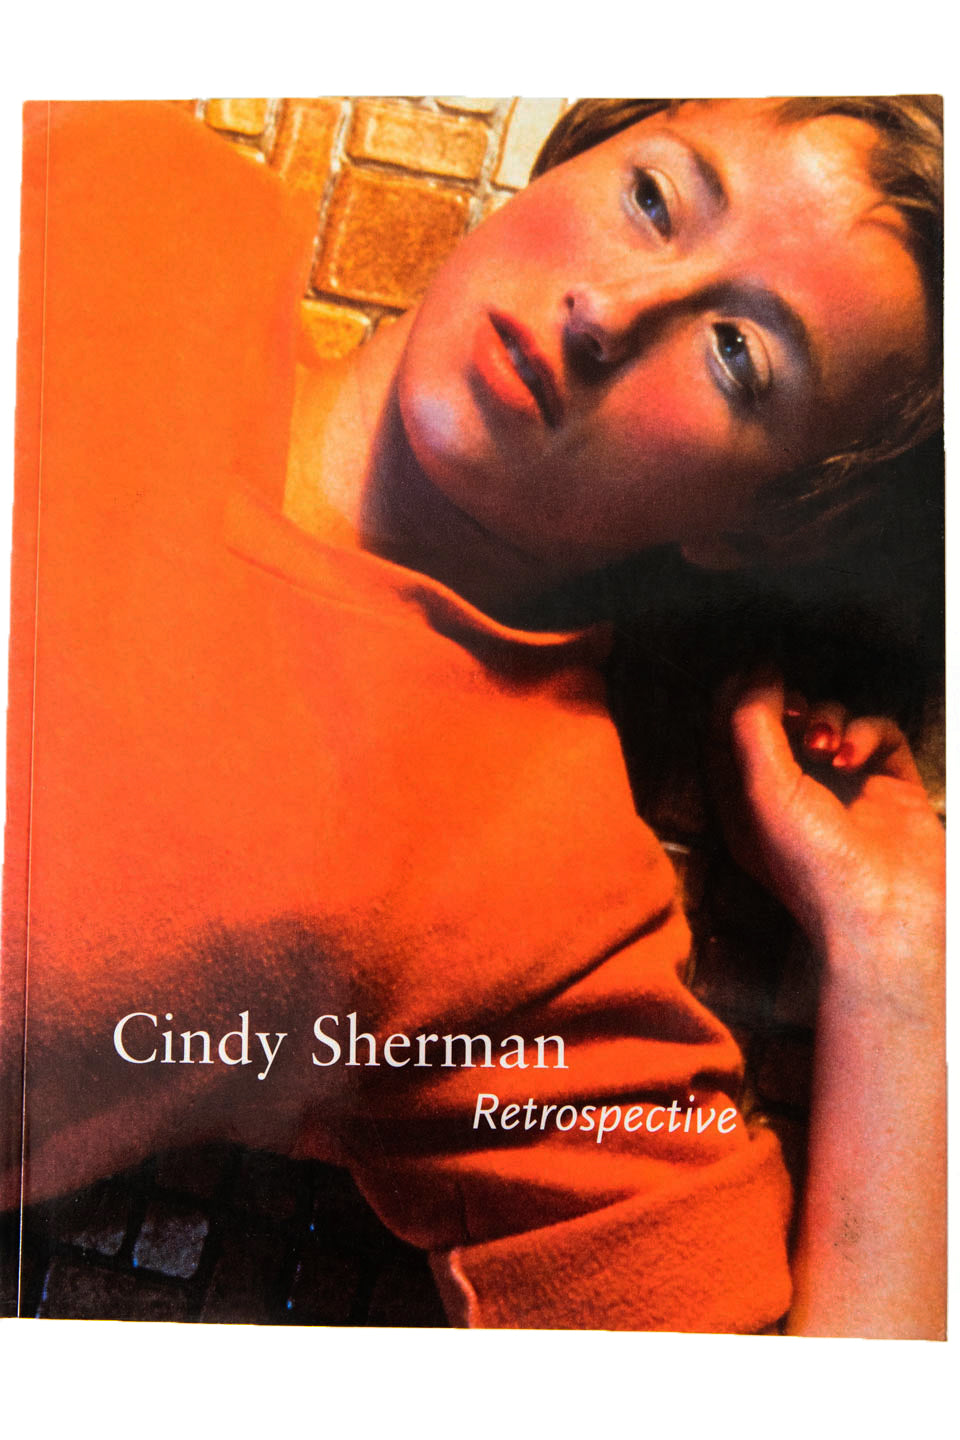 Cindy Sherman: A Retrospective at the Louis